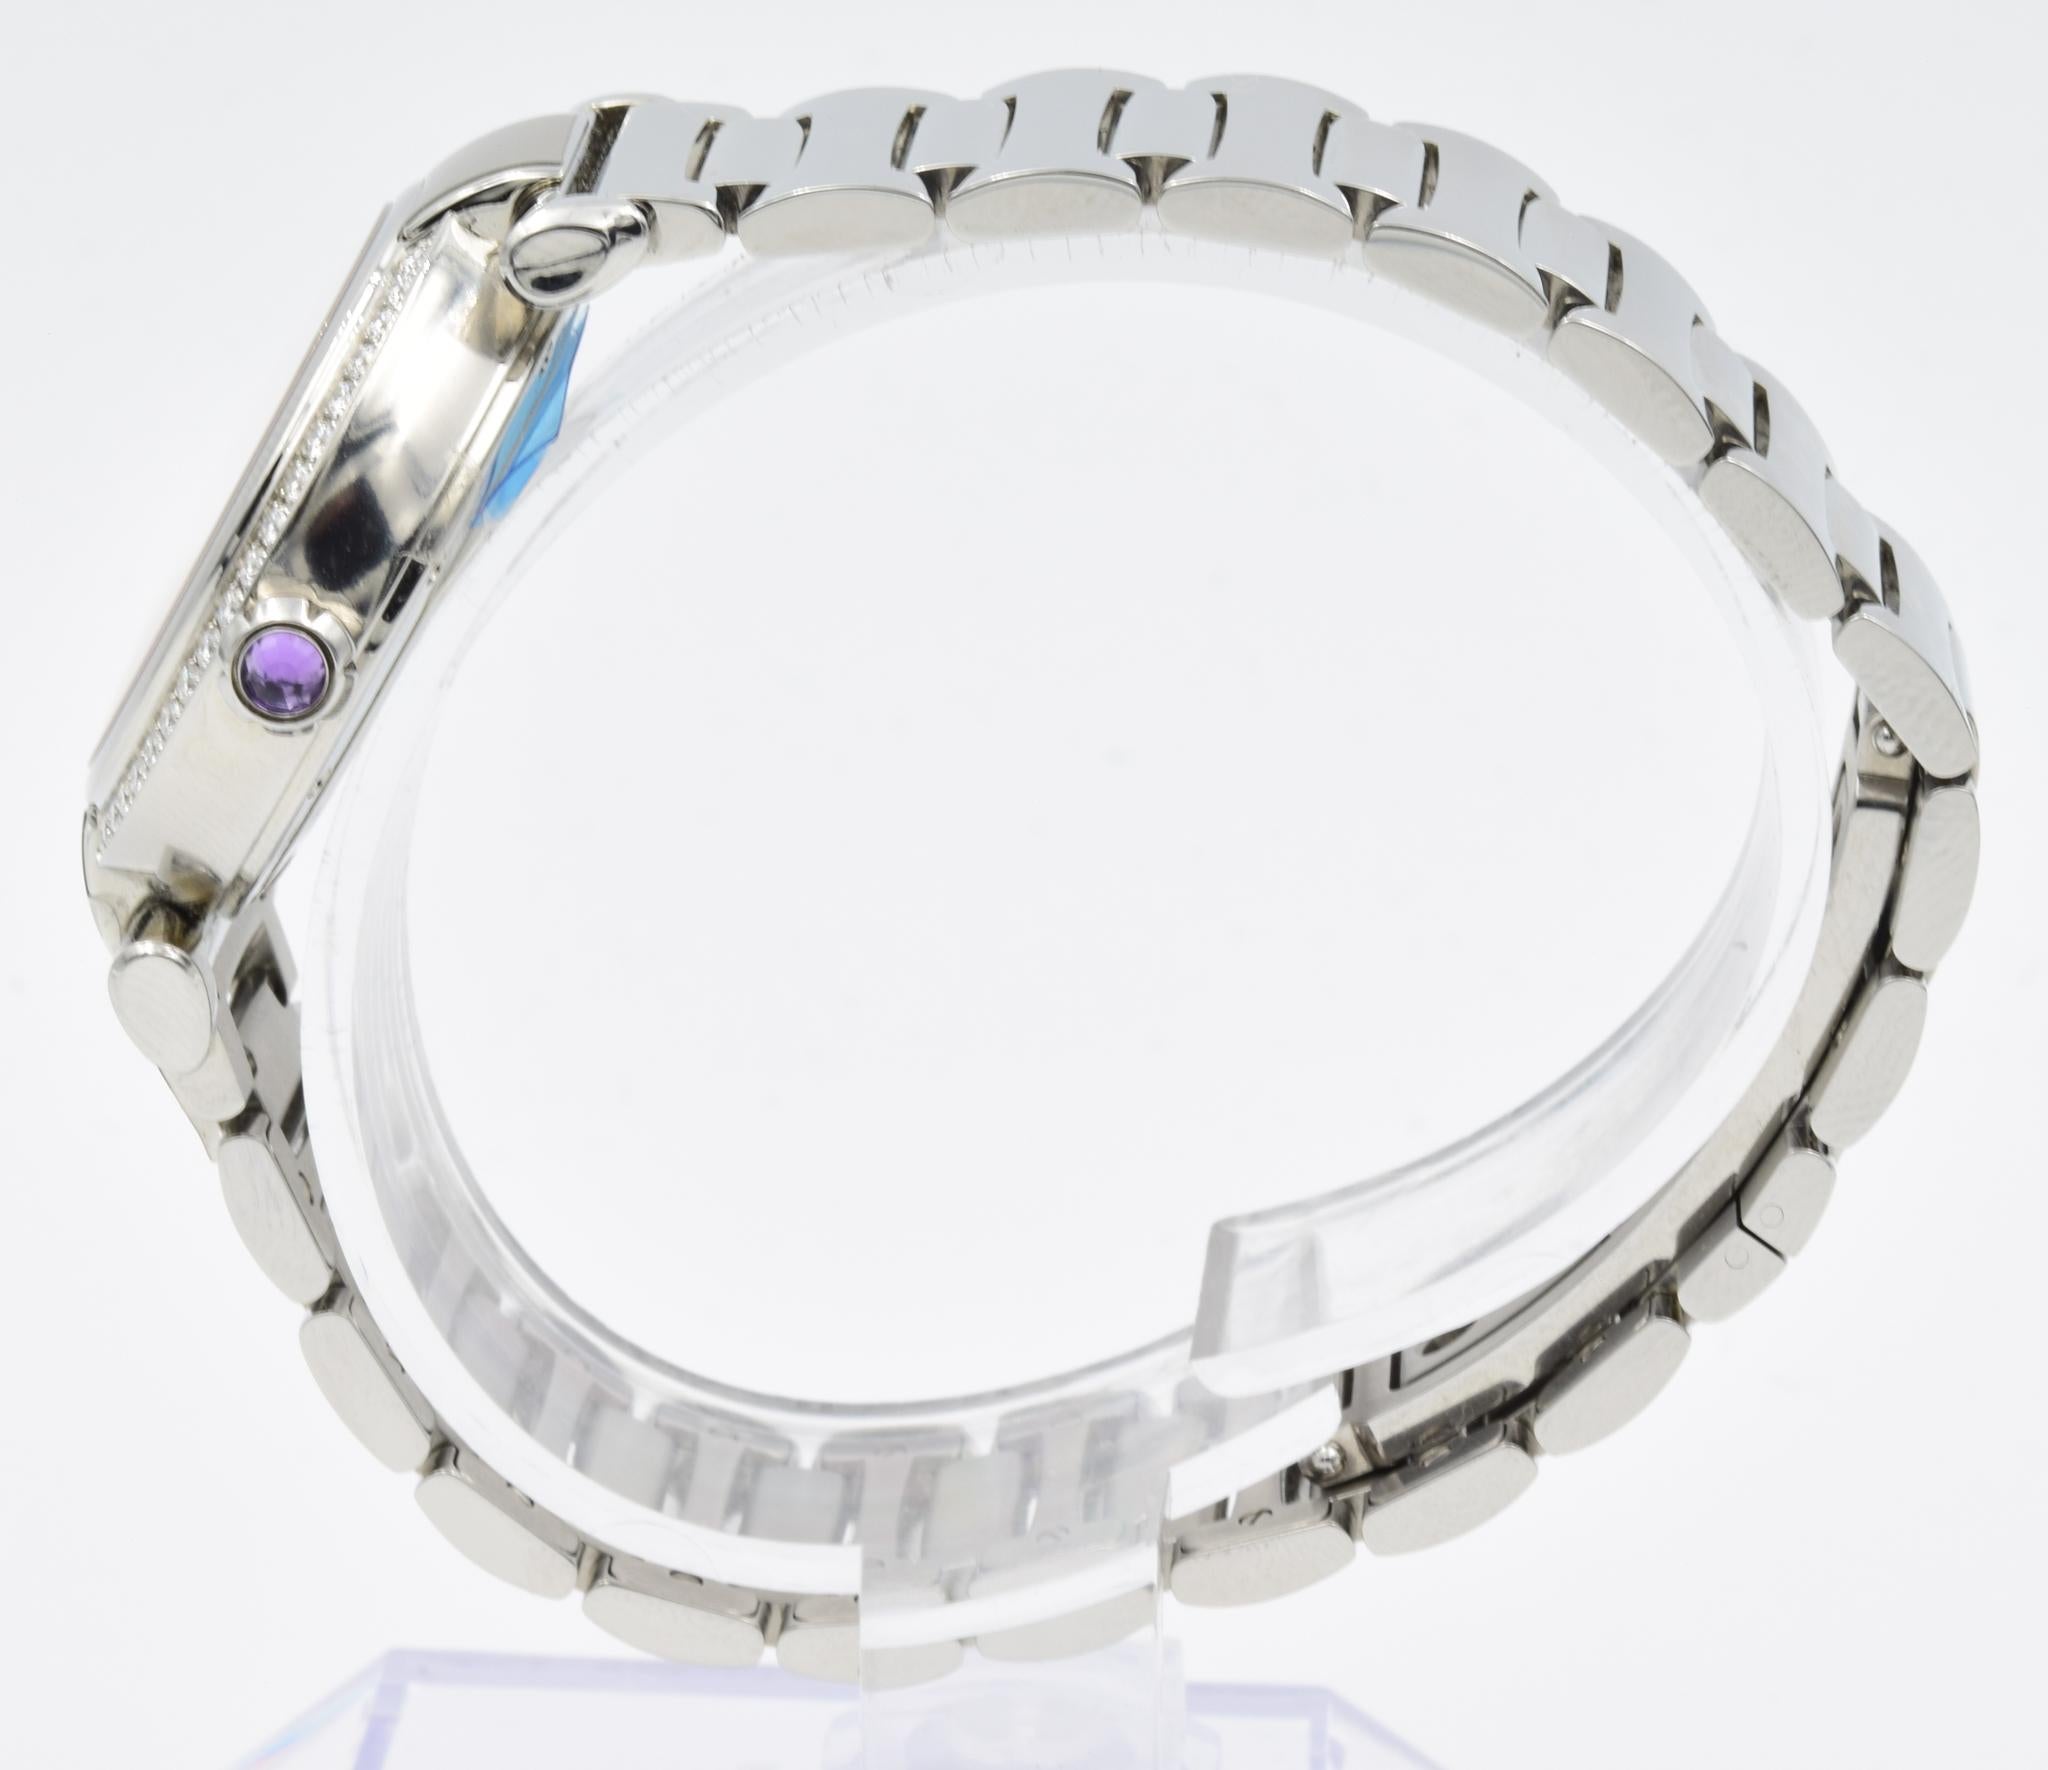 Brilliant Cut Chopard Imperiale Automatic Ladies Watch, 388563-3004